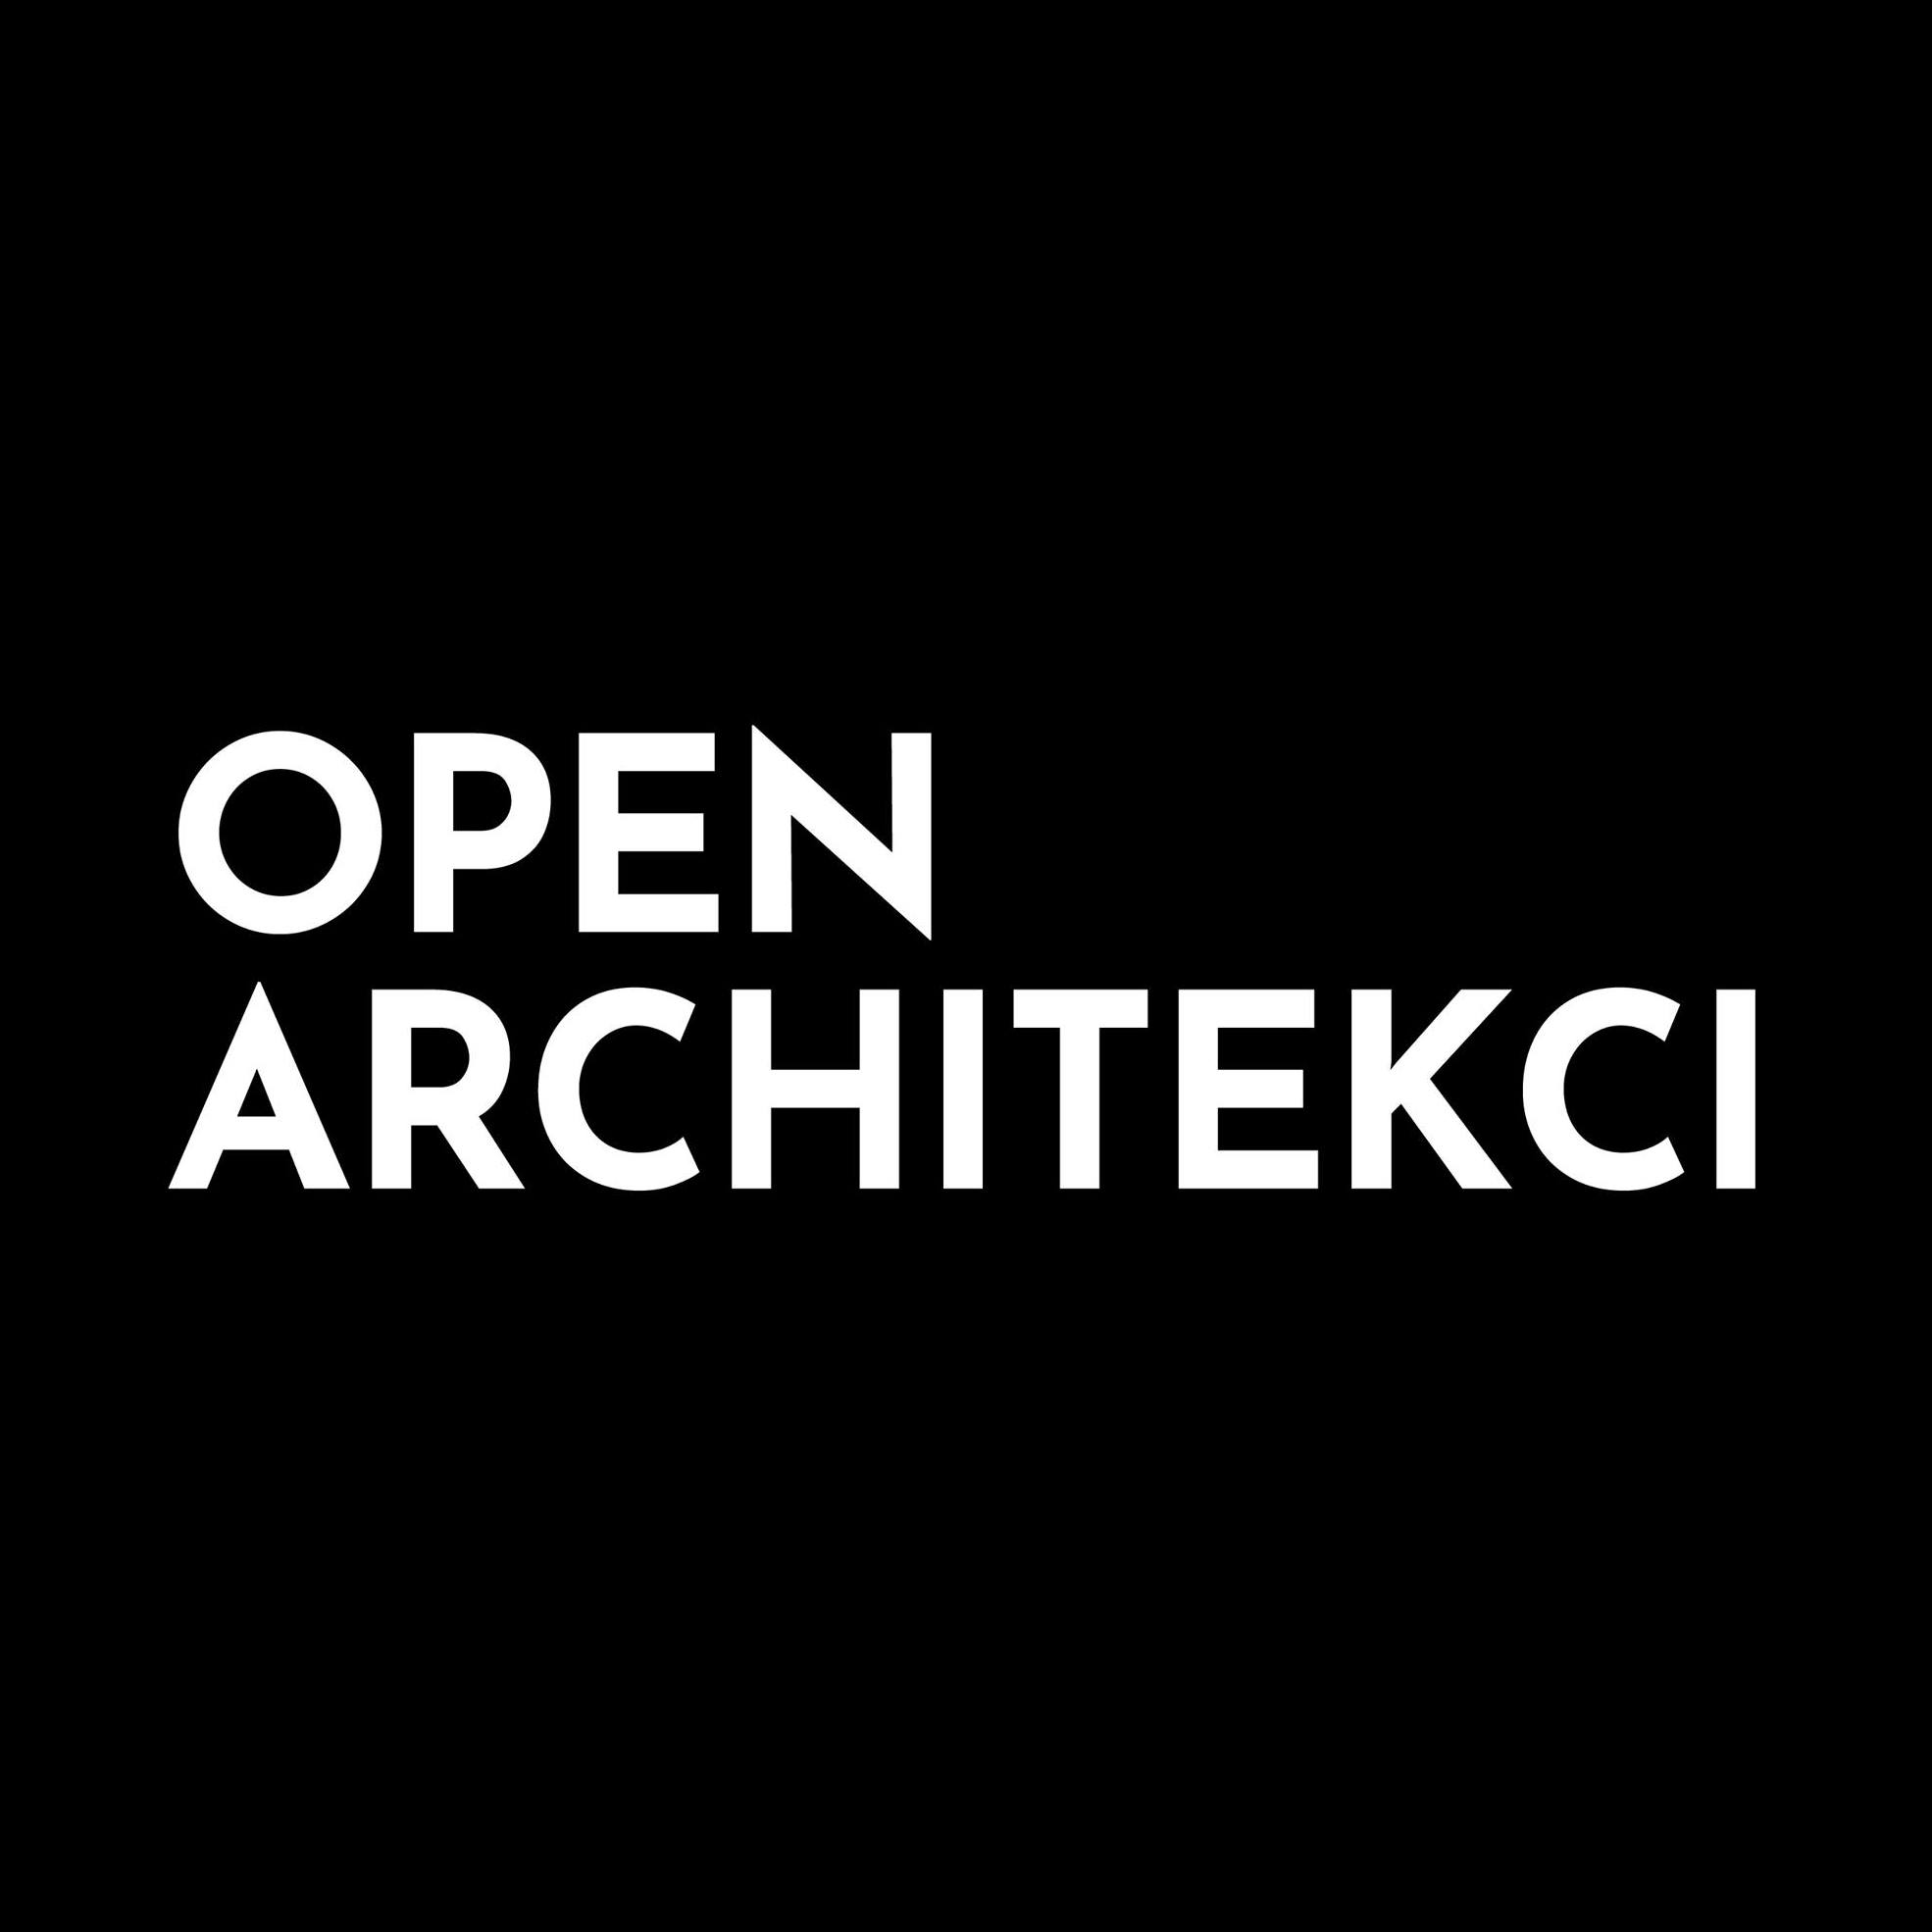 OPEN architekci